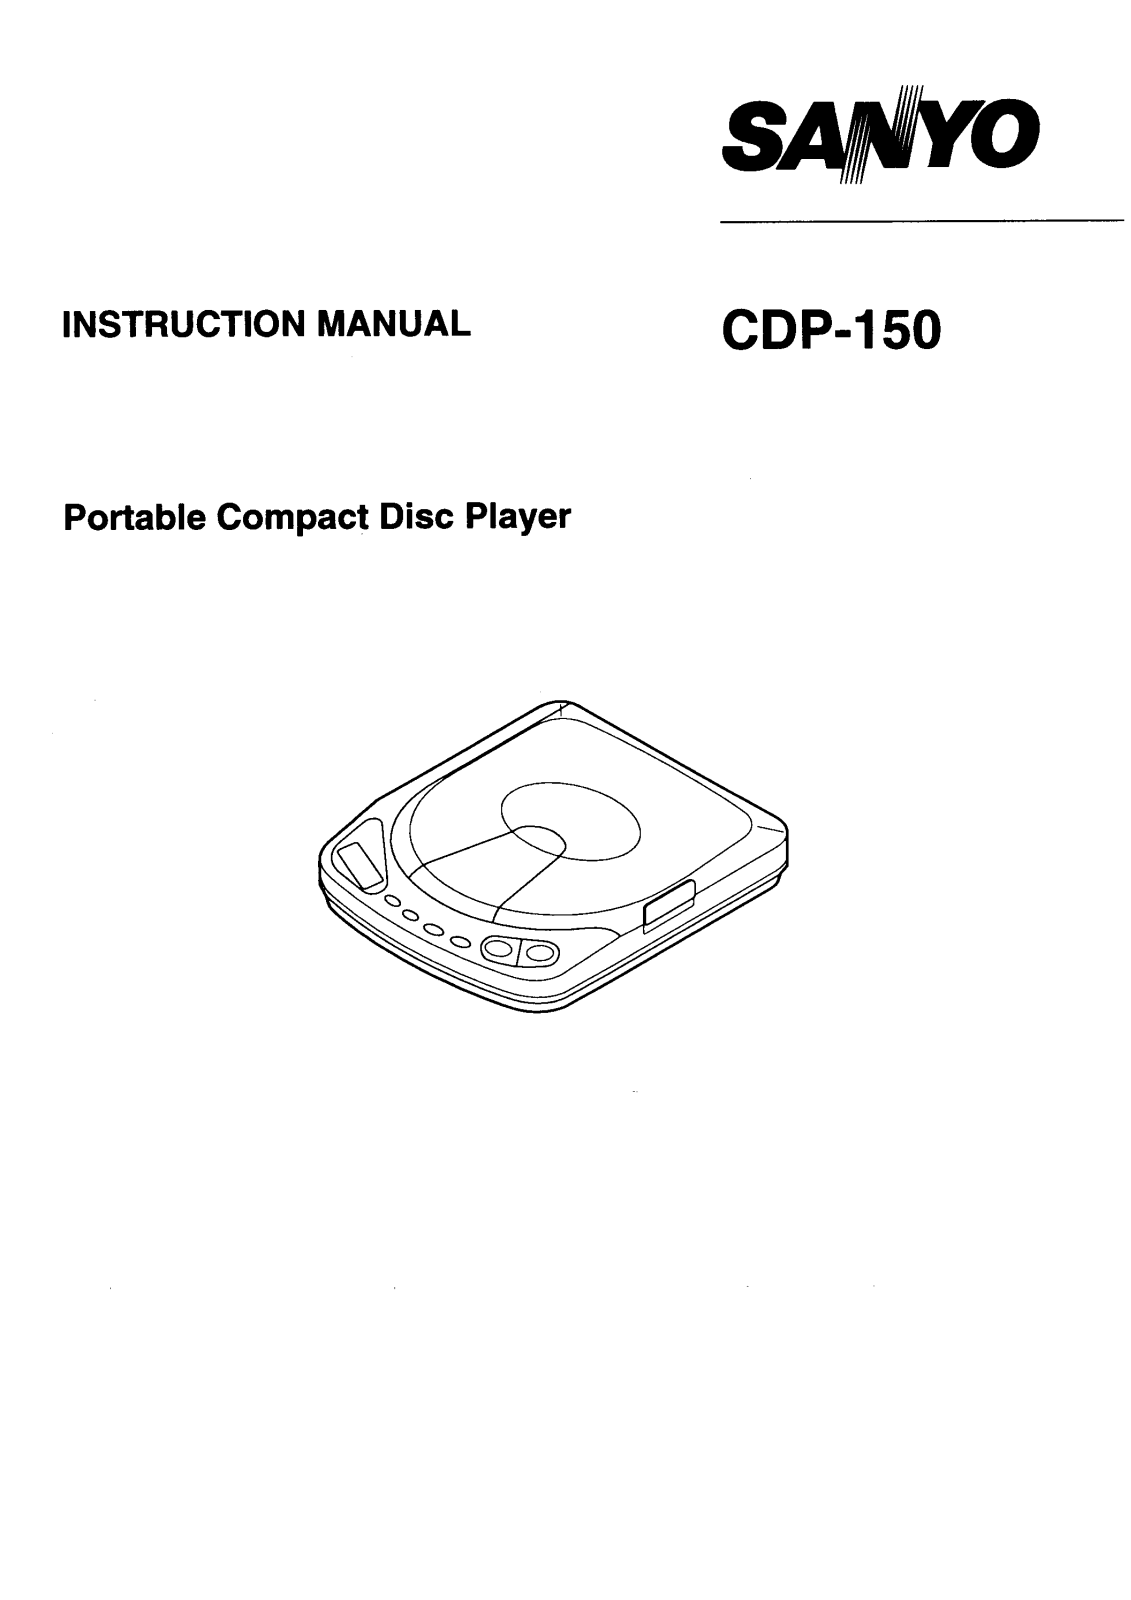 Sanyo CDP-150 Instruction Manual